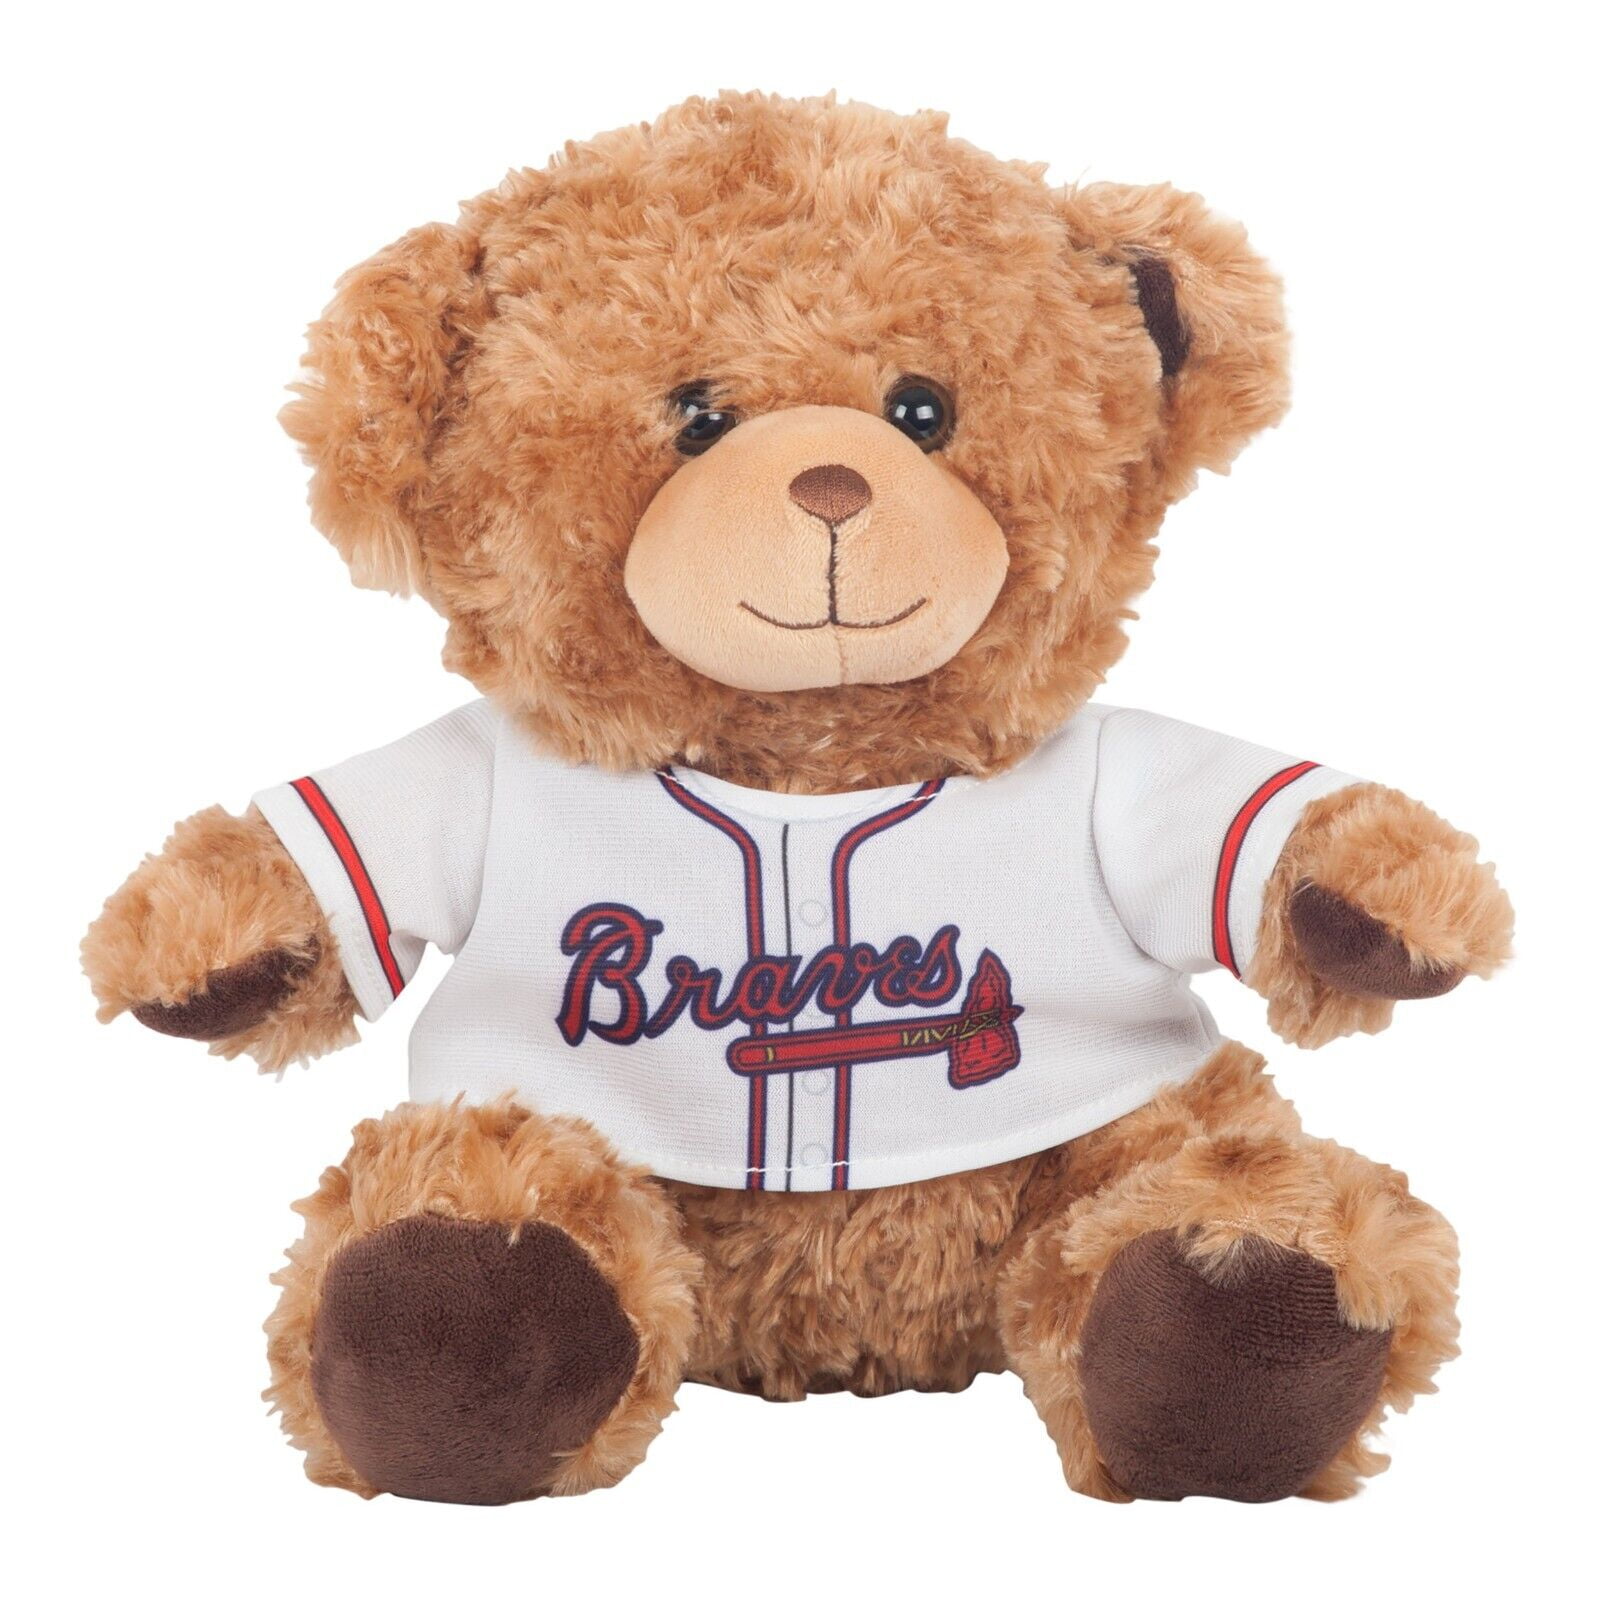 Teddy Bear Plush 7 inches with white Atlanta baseball jersey